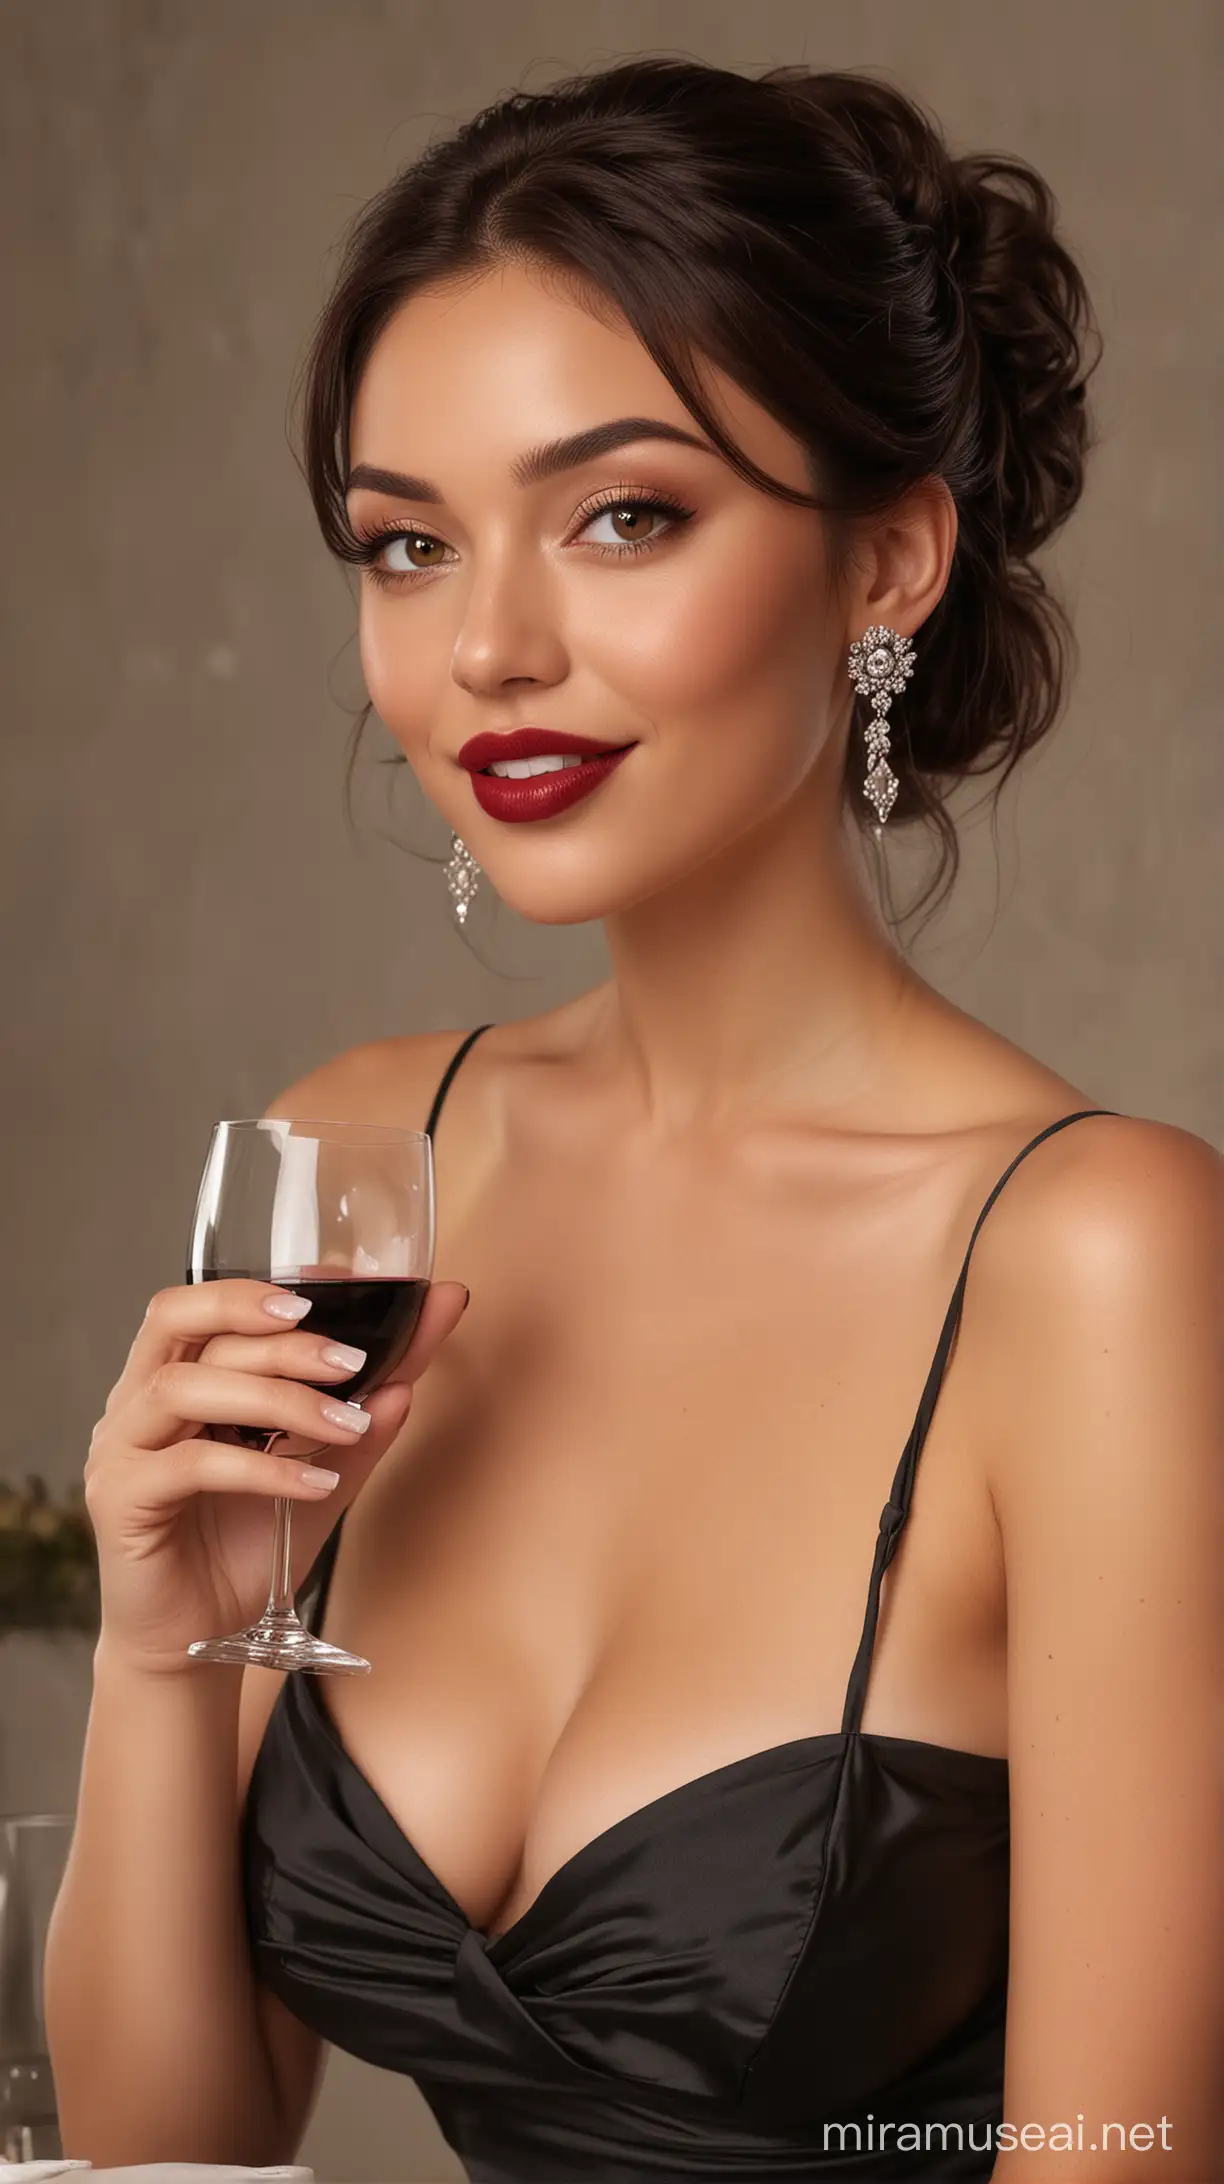 Elegant AfricanAmerican Woman Enjoying Night Date Dinner with Red Wine